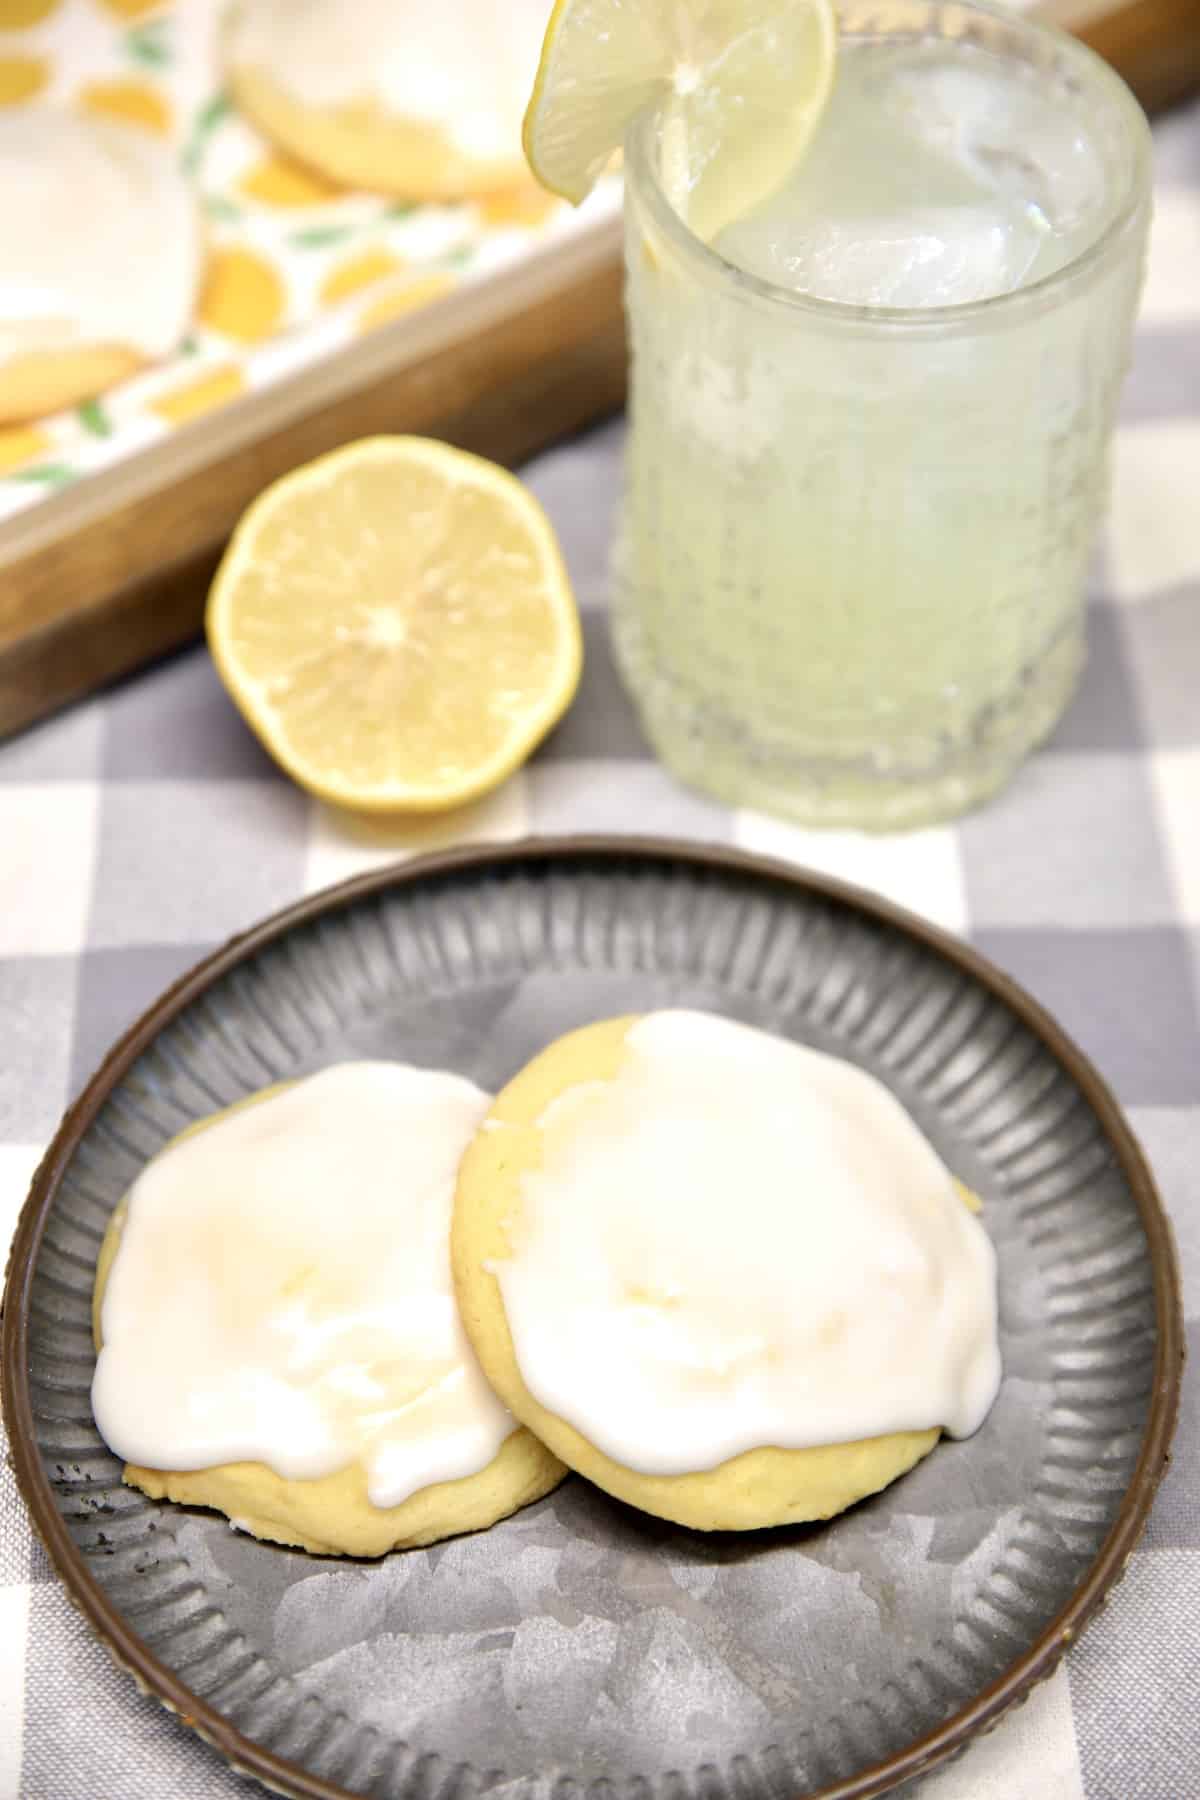 2 Lemon butter cookies on a plate, half of a lemon, glass of lemonade.